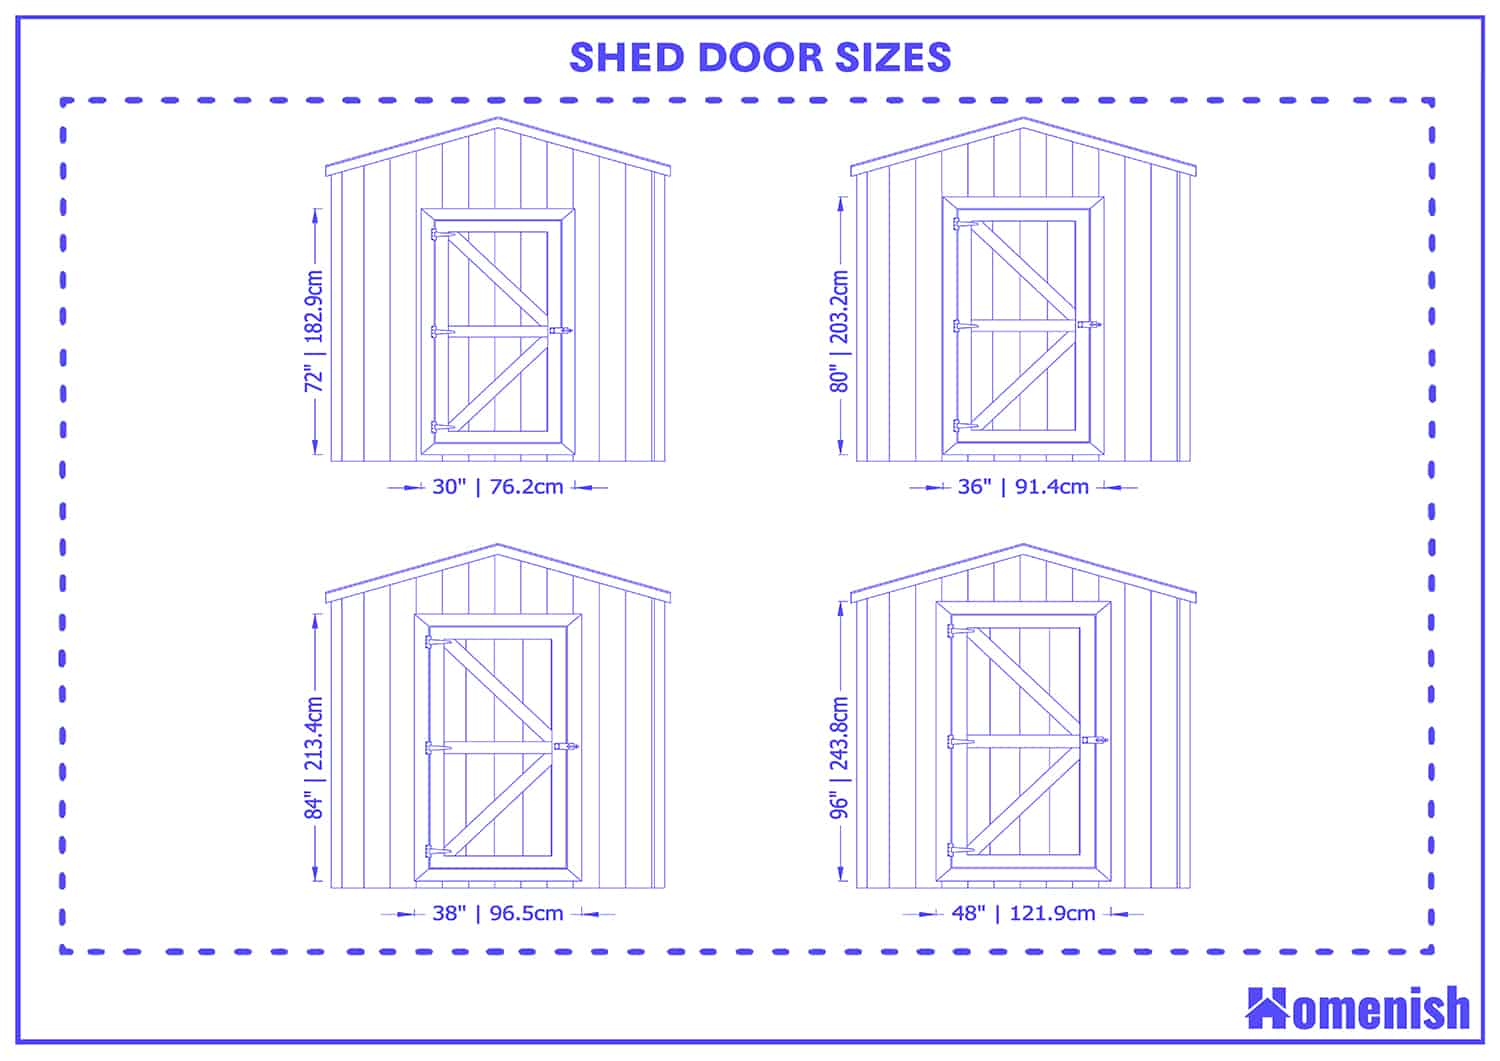 Shed door sizes